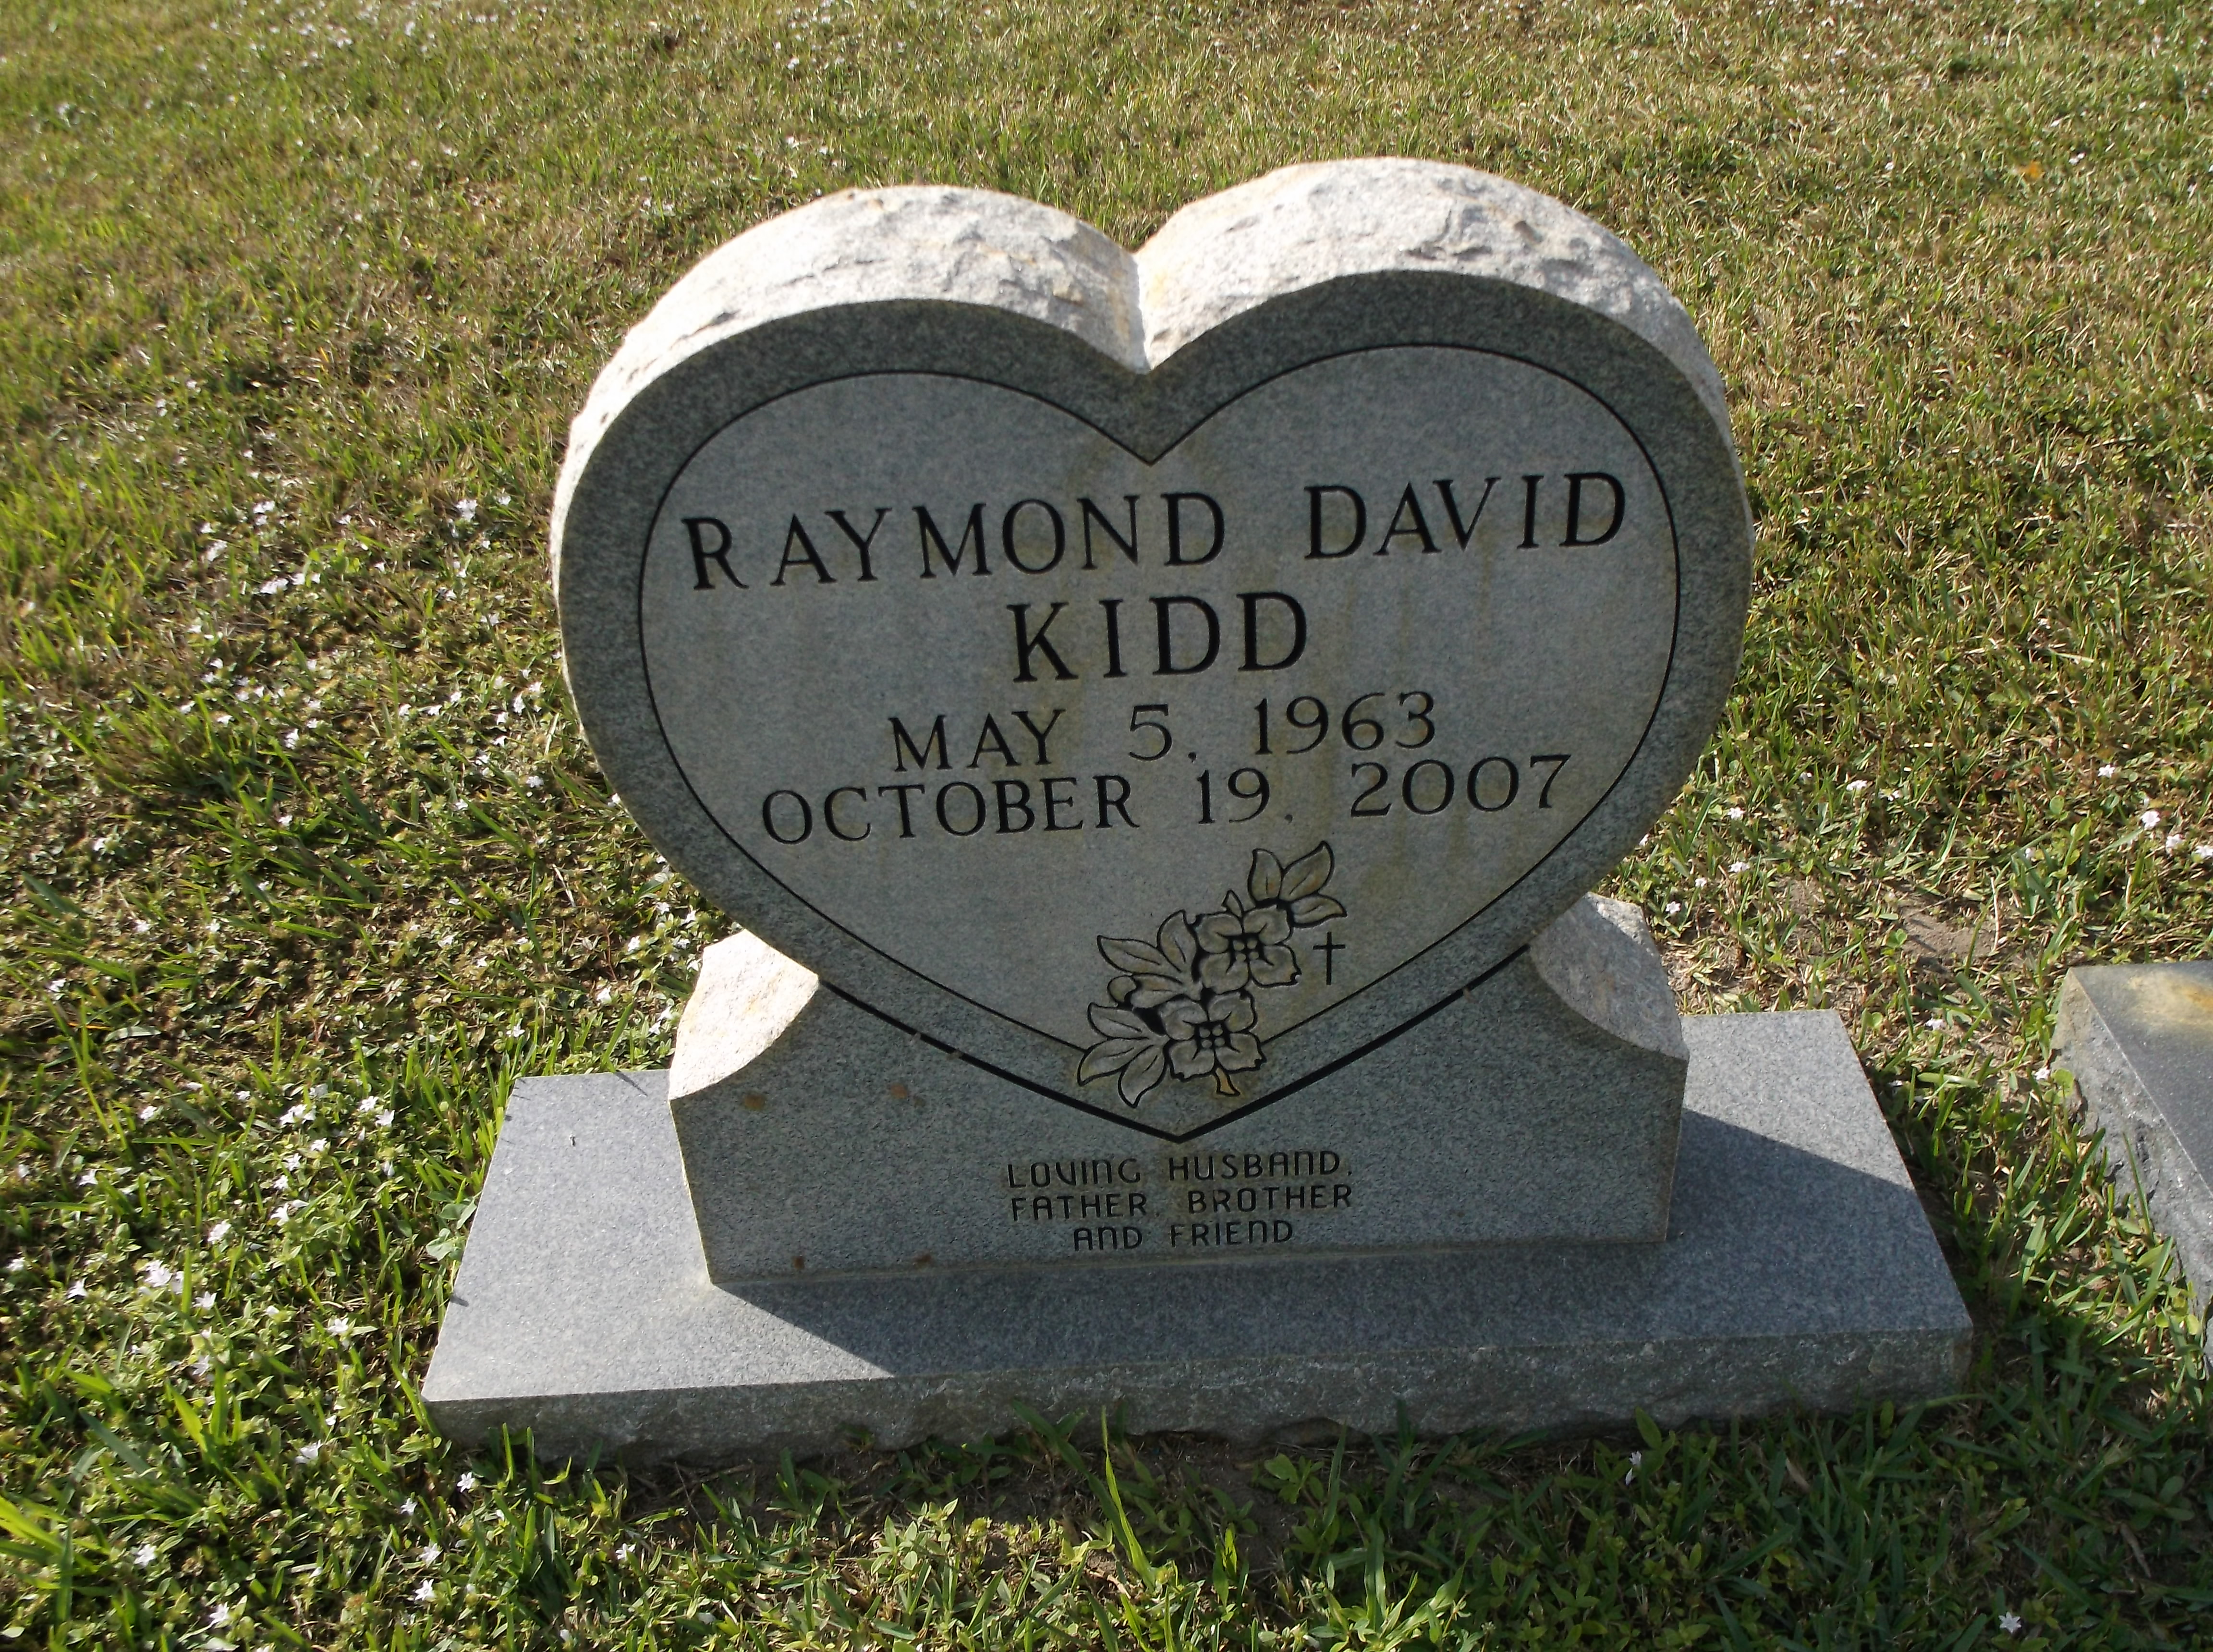 Raymond David Kidd